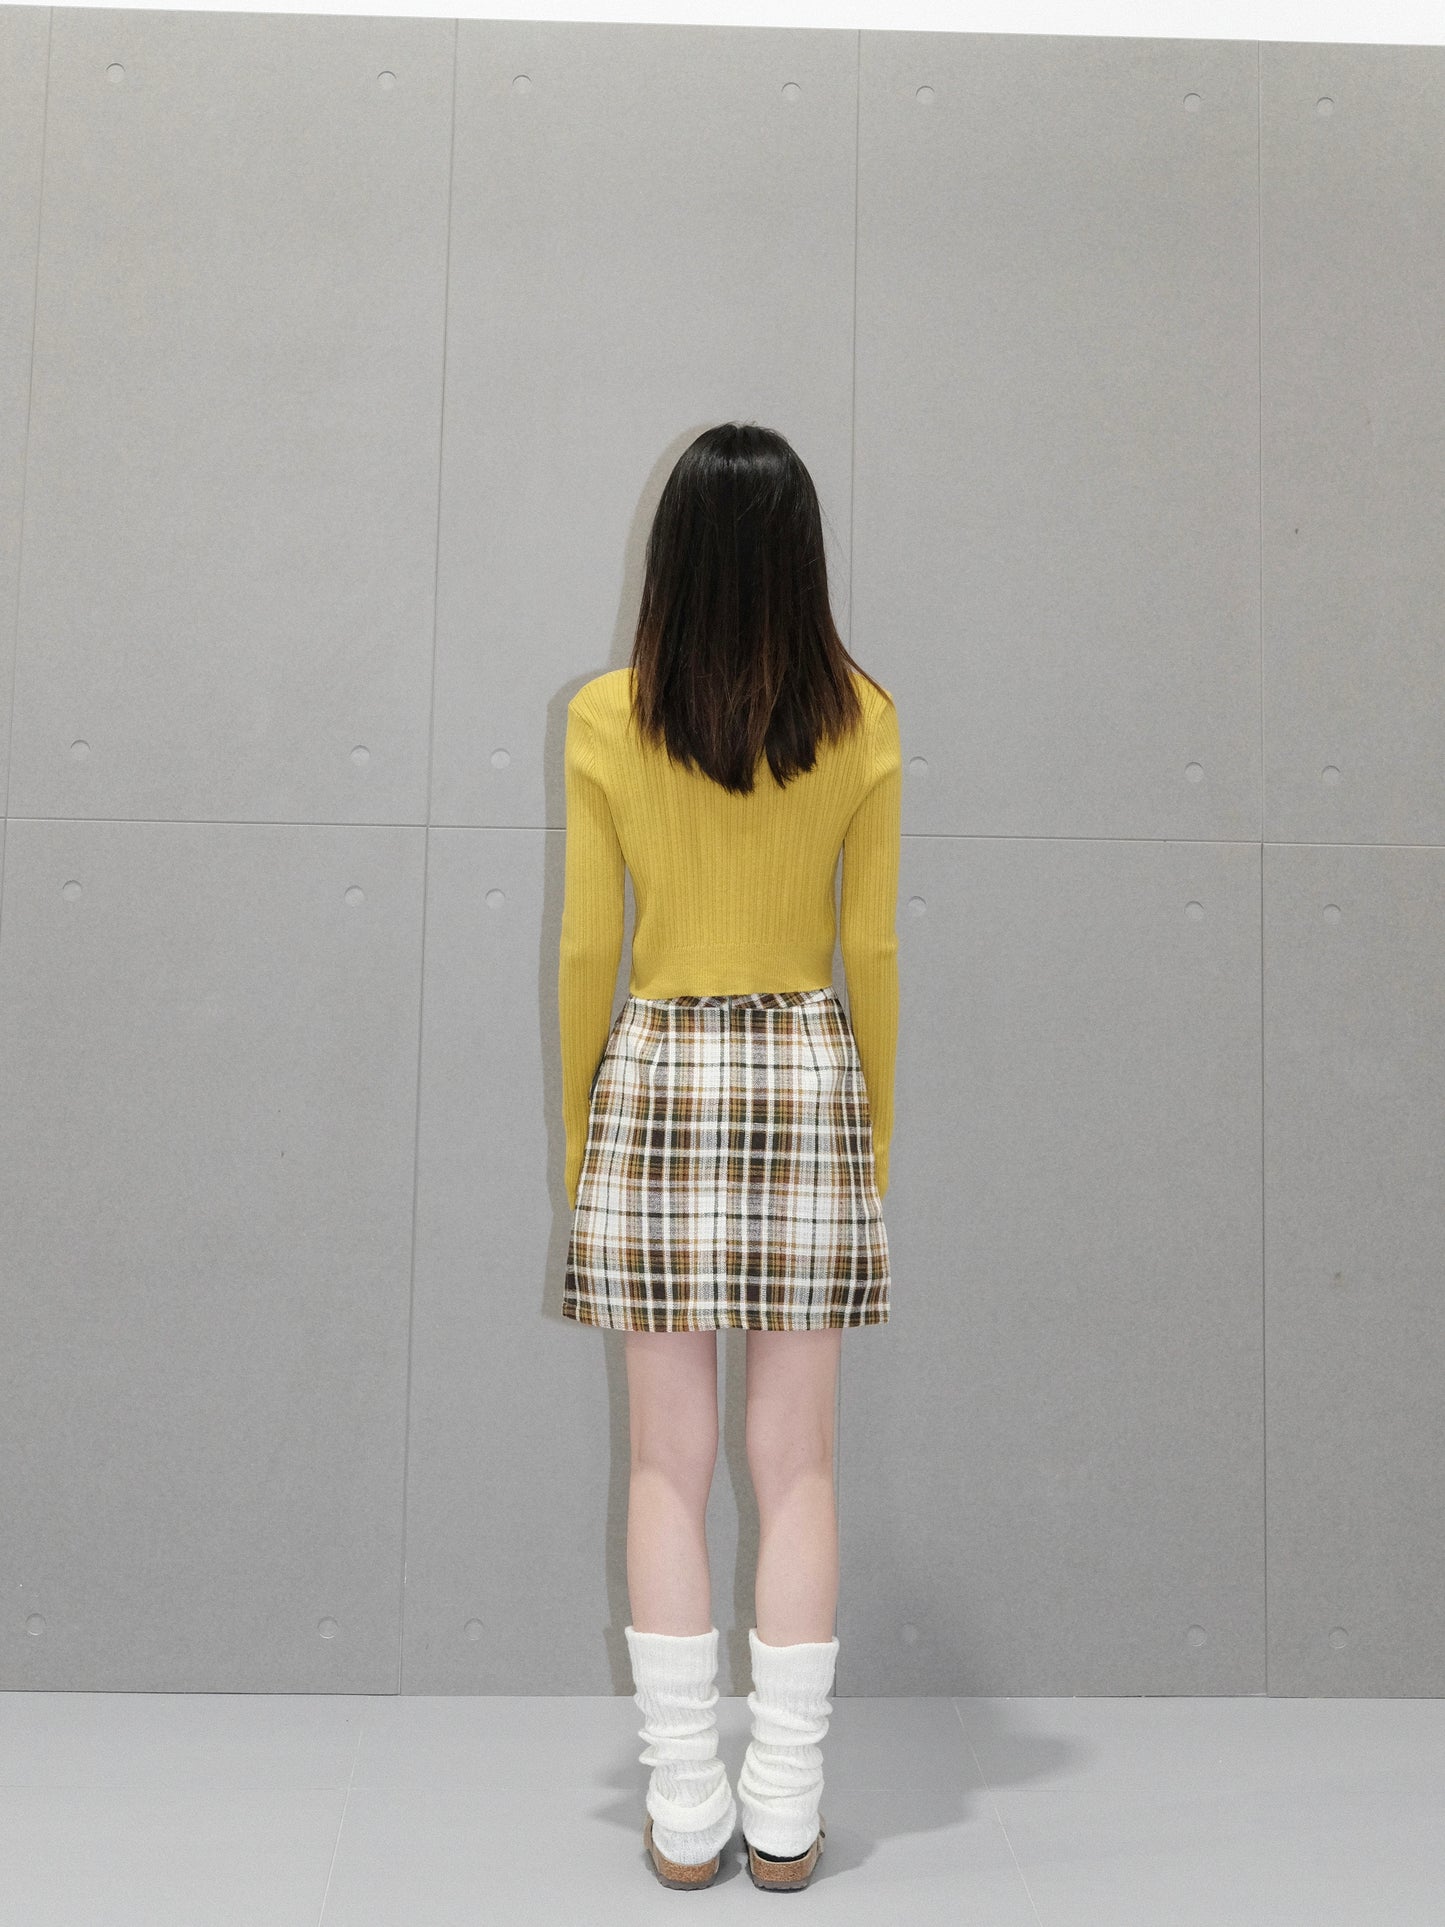 The Plaid Mini Skirt